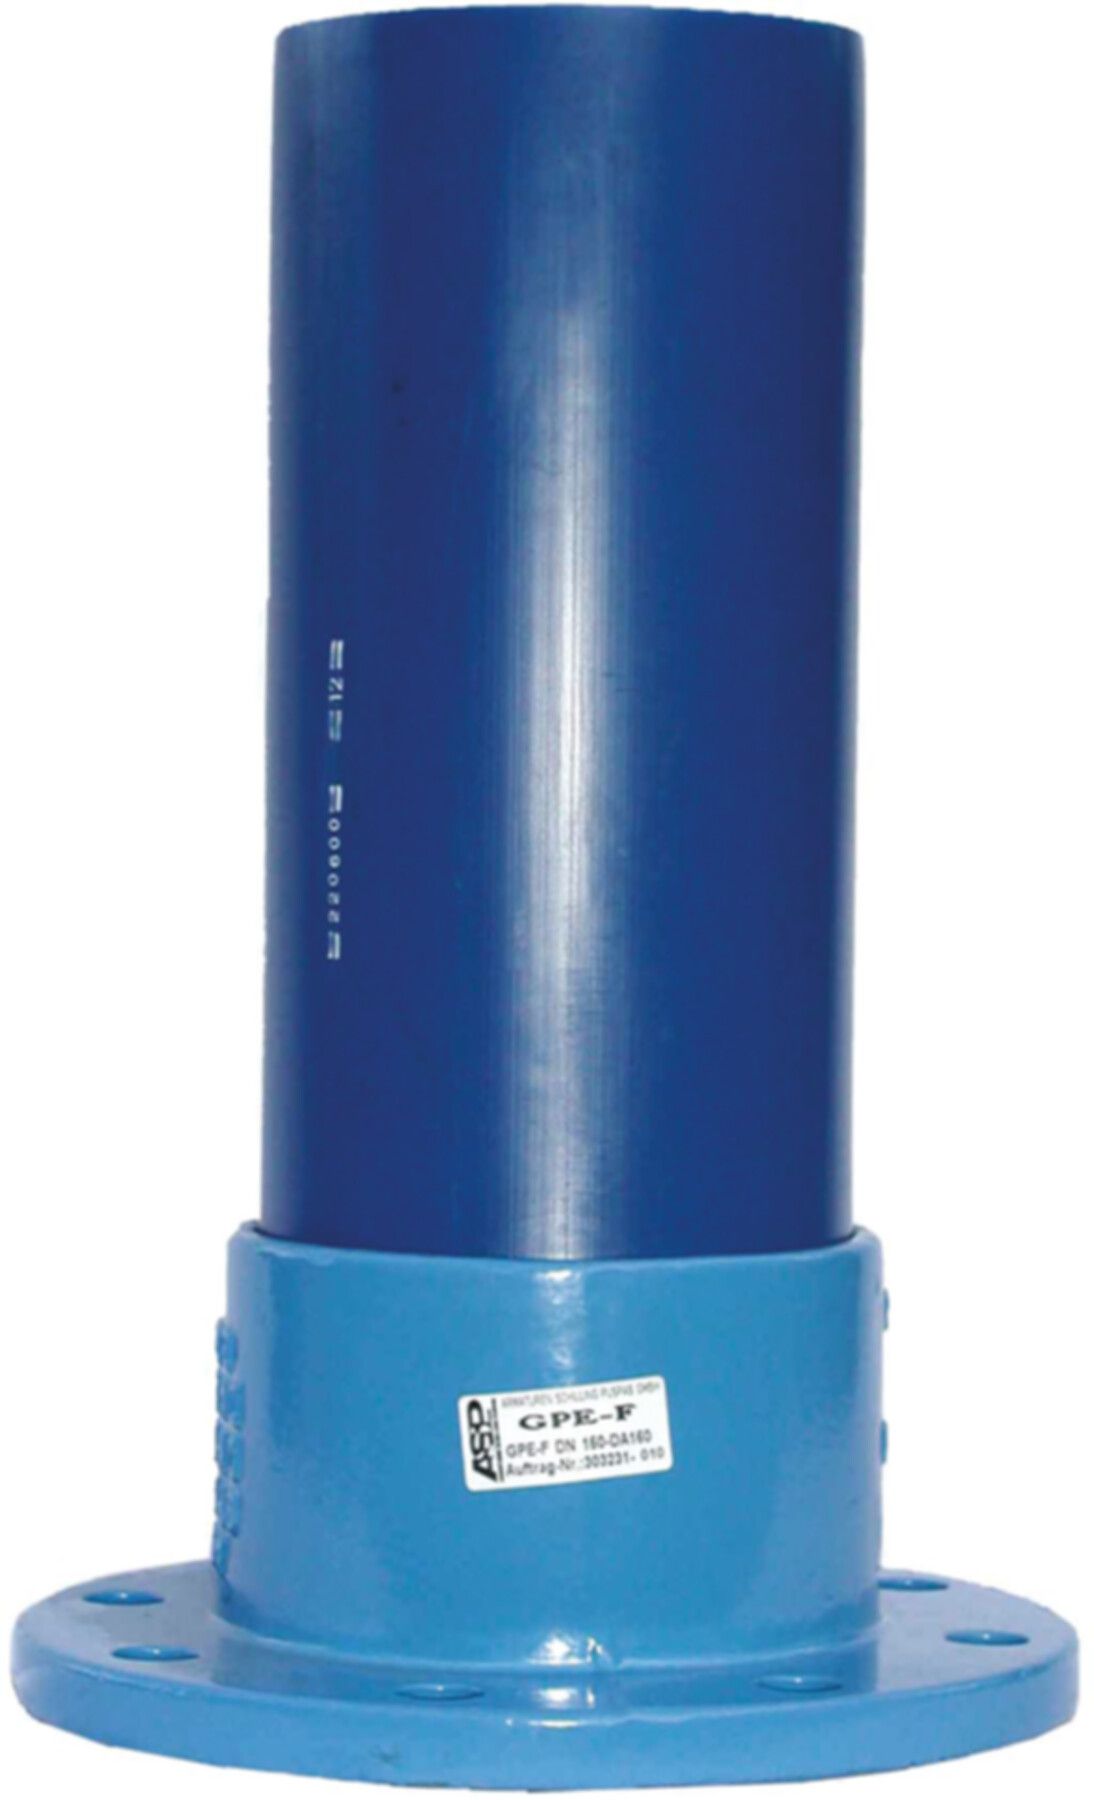 Übergangsstück Flansch-PE GPE PE100 S5 für Wasser PN 10 DN 200 / d 225mm - Frischhut Steckmuffenformstücke